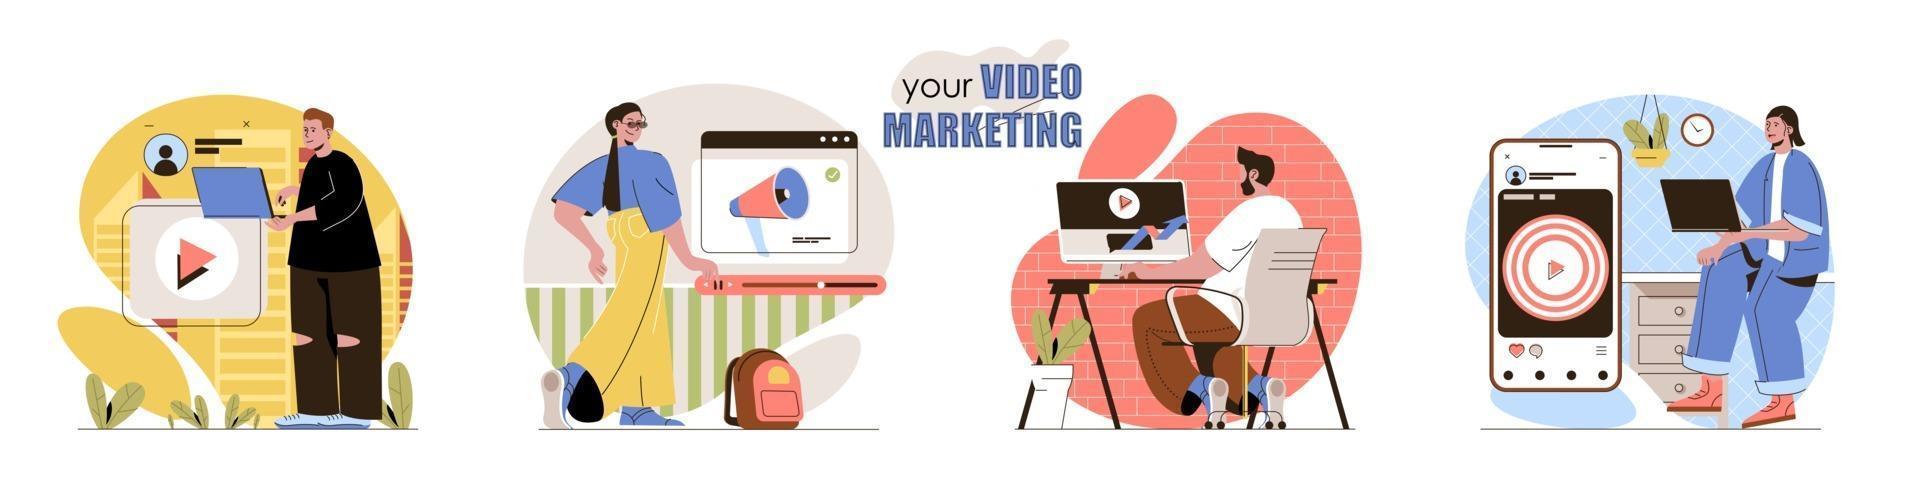 Video marketing concept scenes set vector